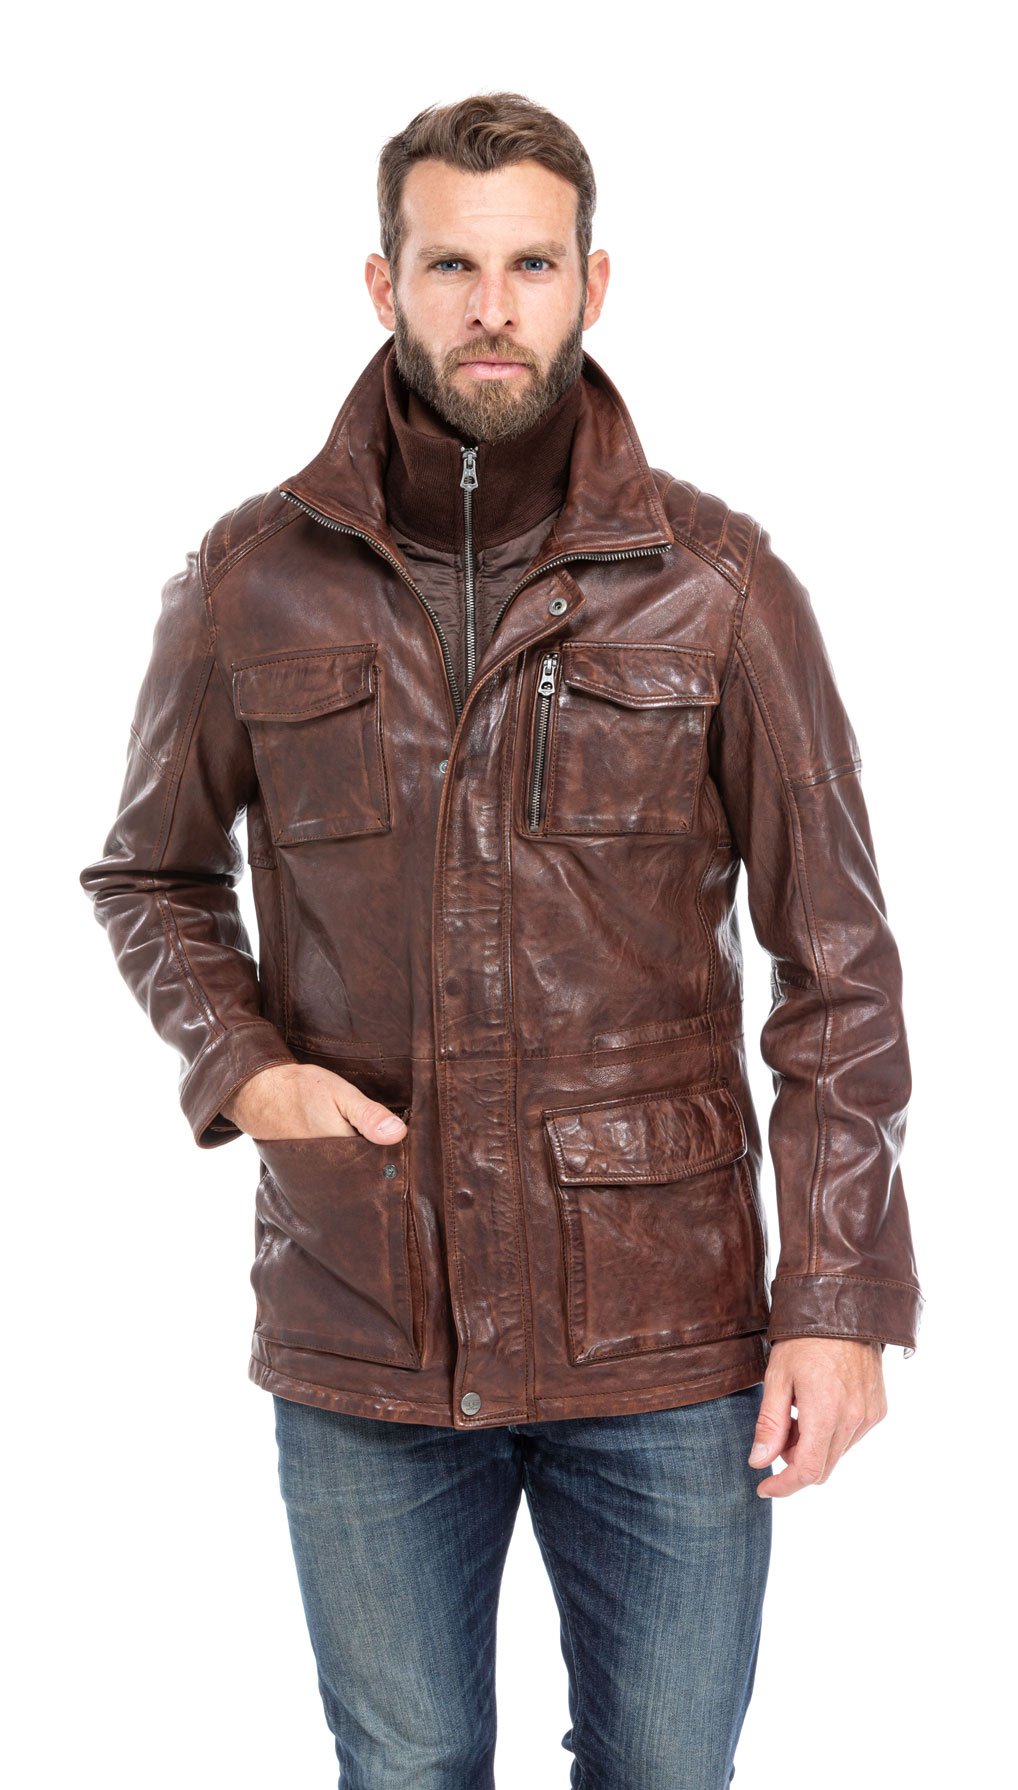 veste cuir homme agneau dark cognac 101284 style saharienne (6)